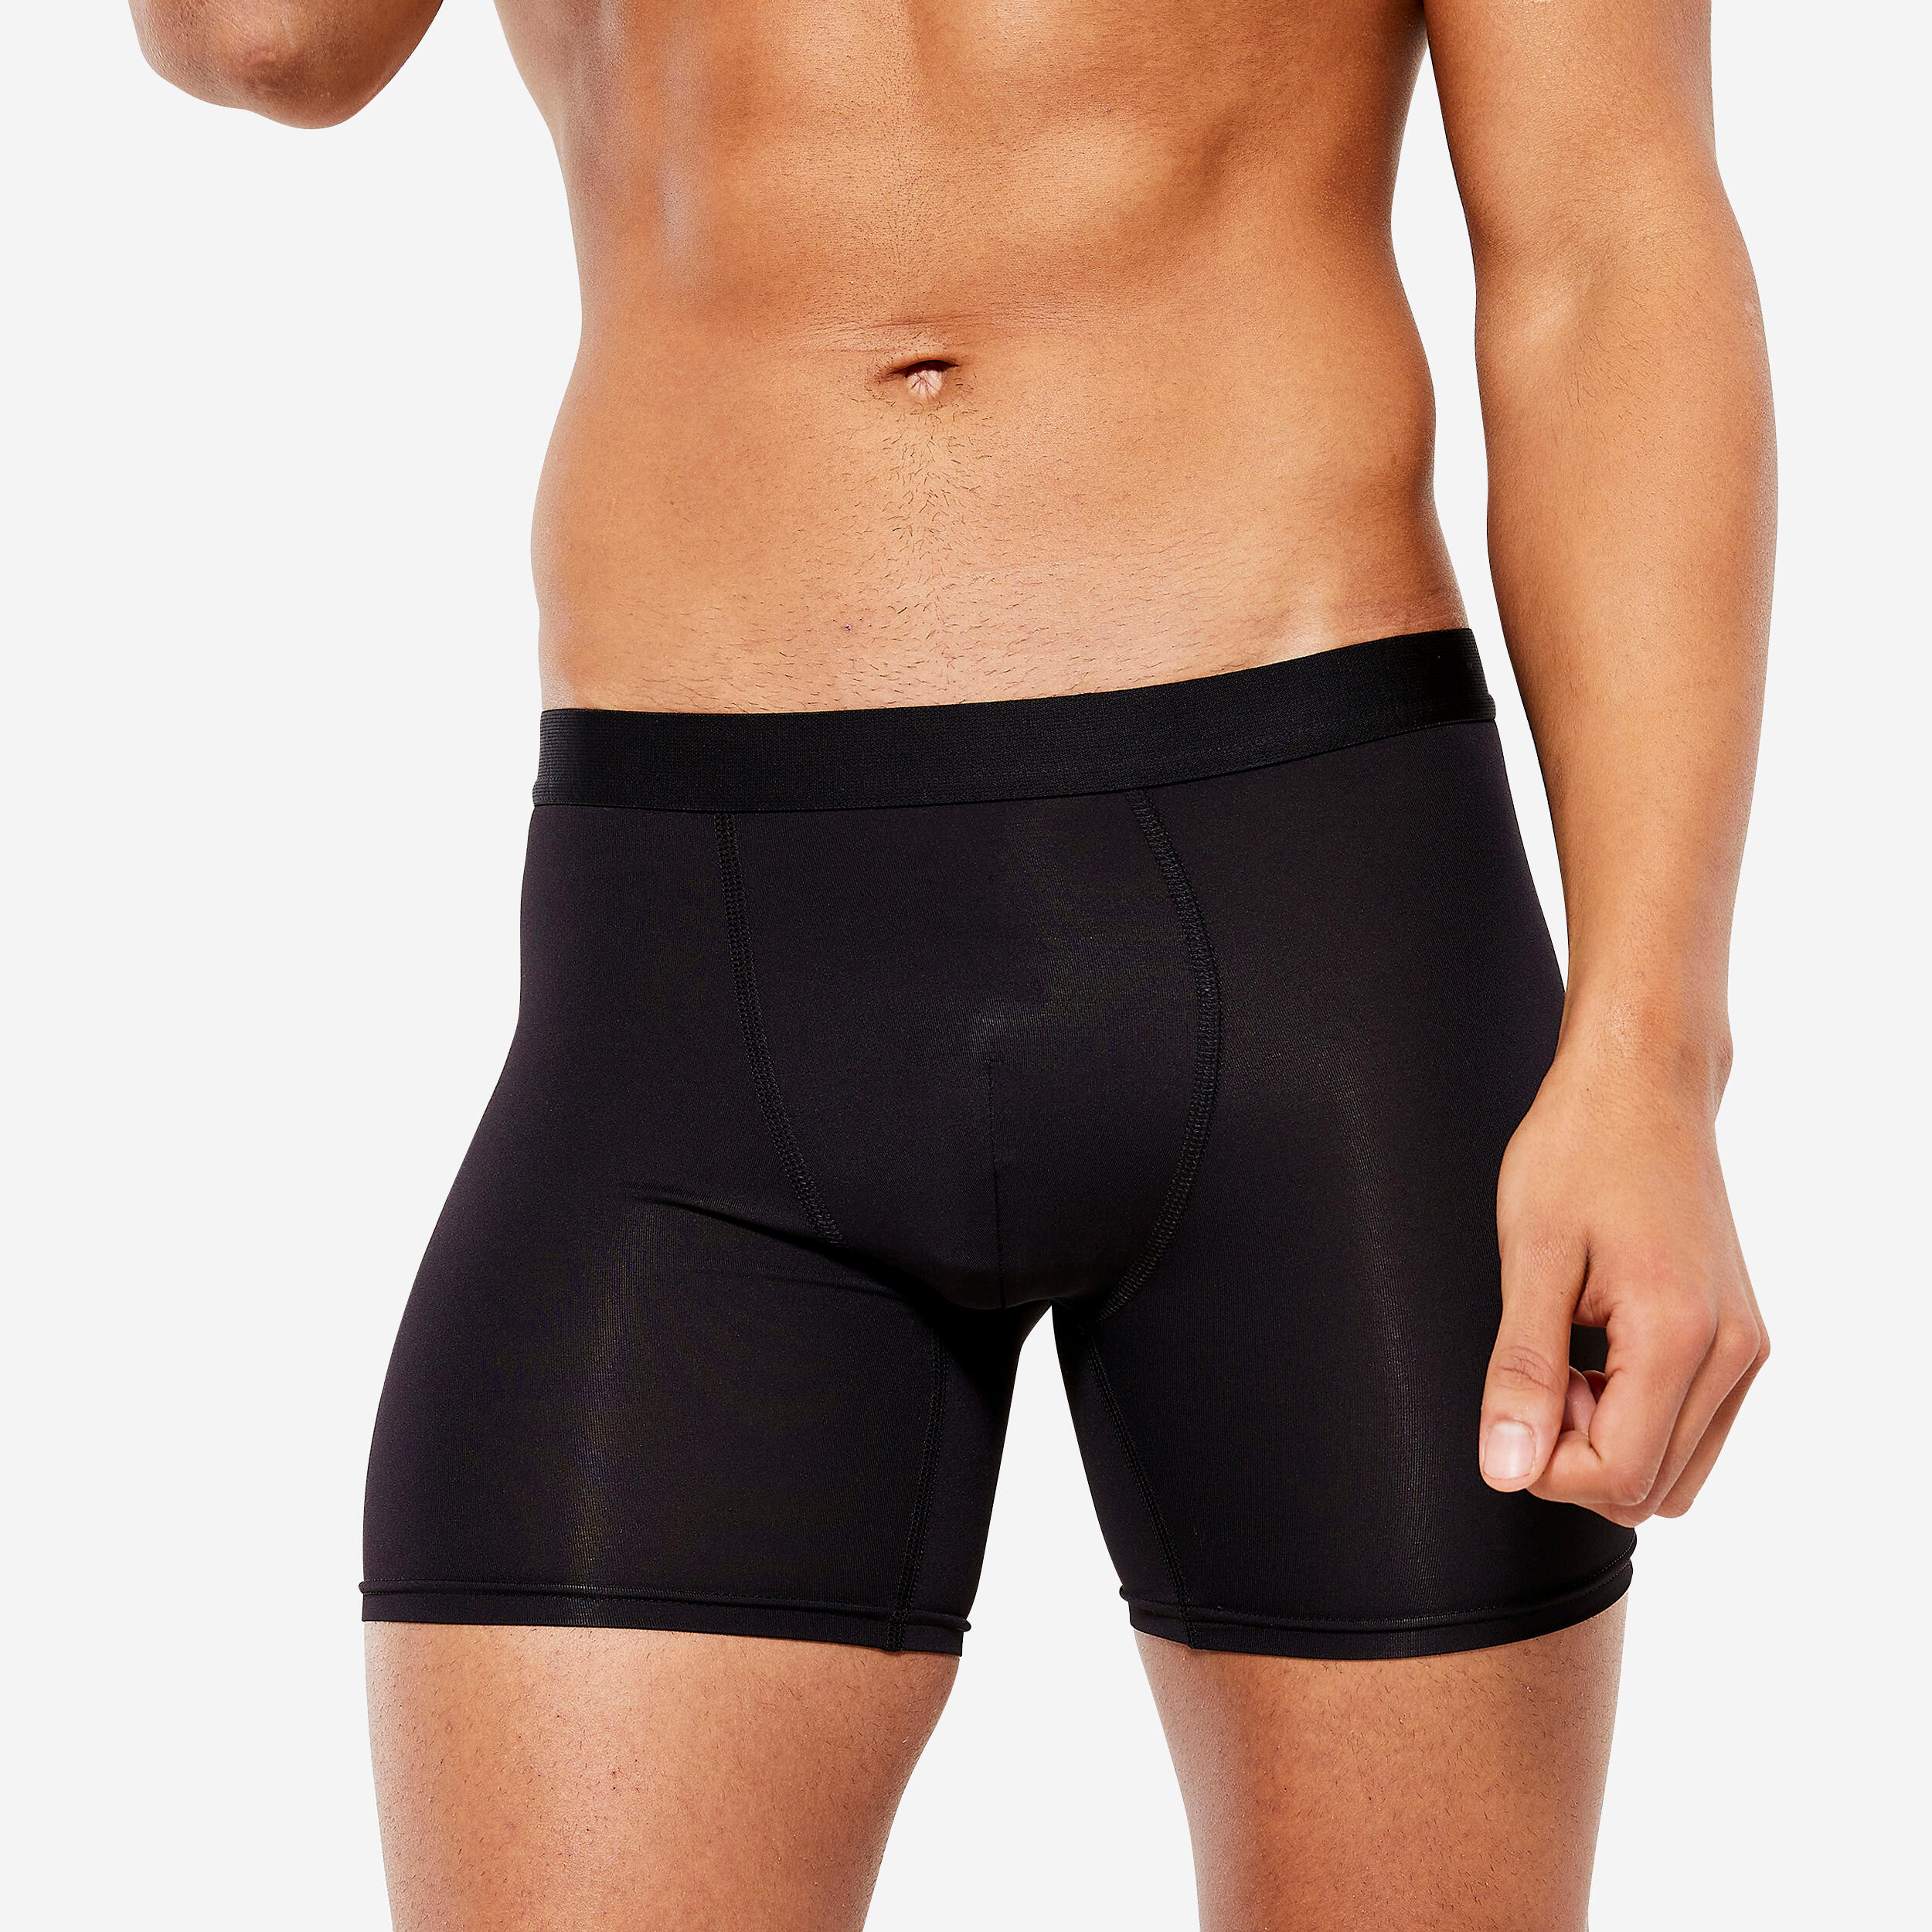 NBA Men's Athletic Wear Black & White Boxer Briefs Underwear Small Spandex  NWT